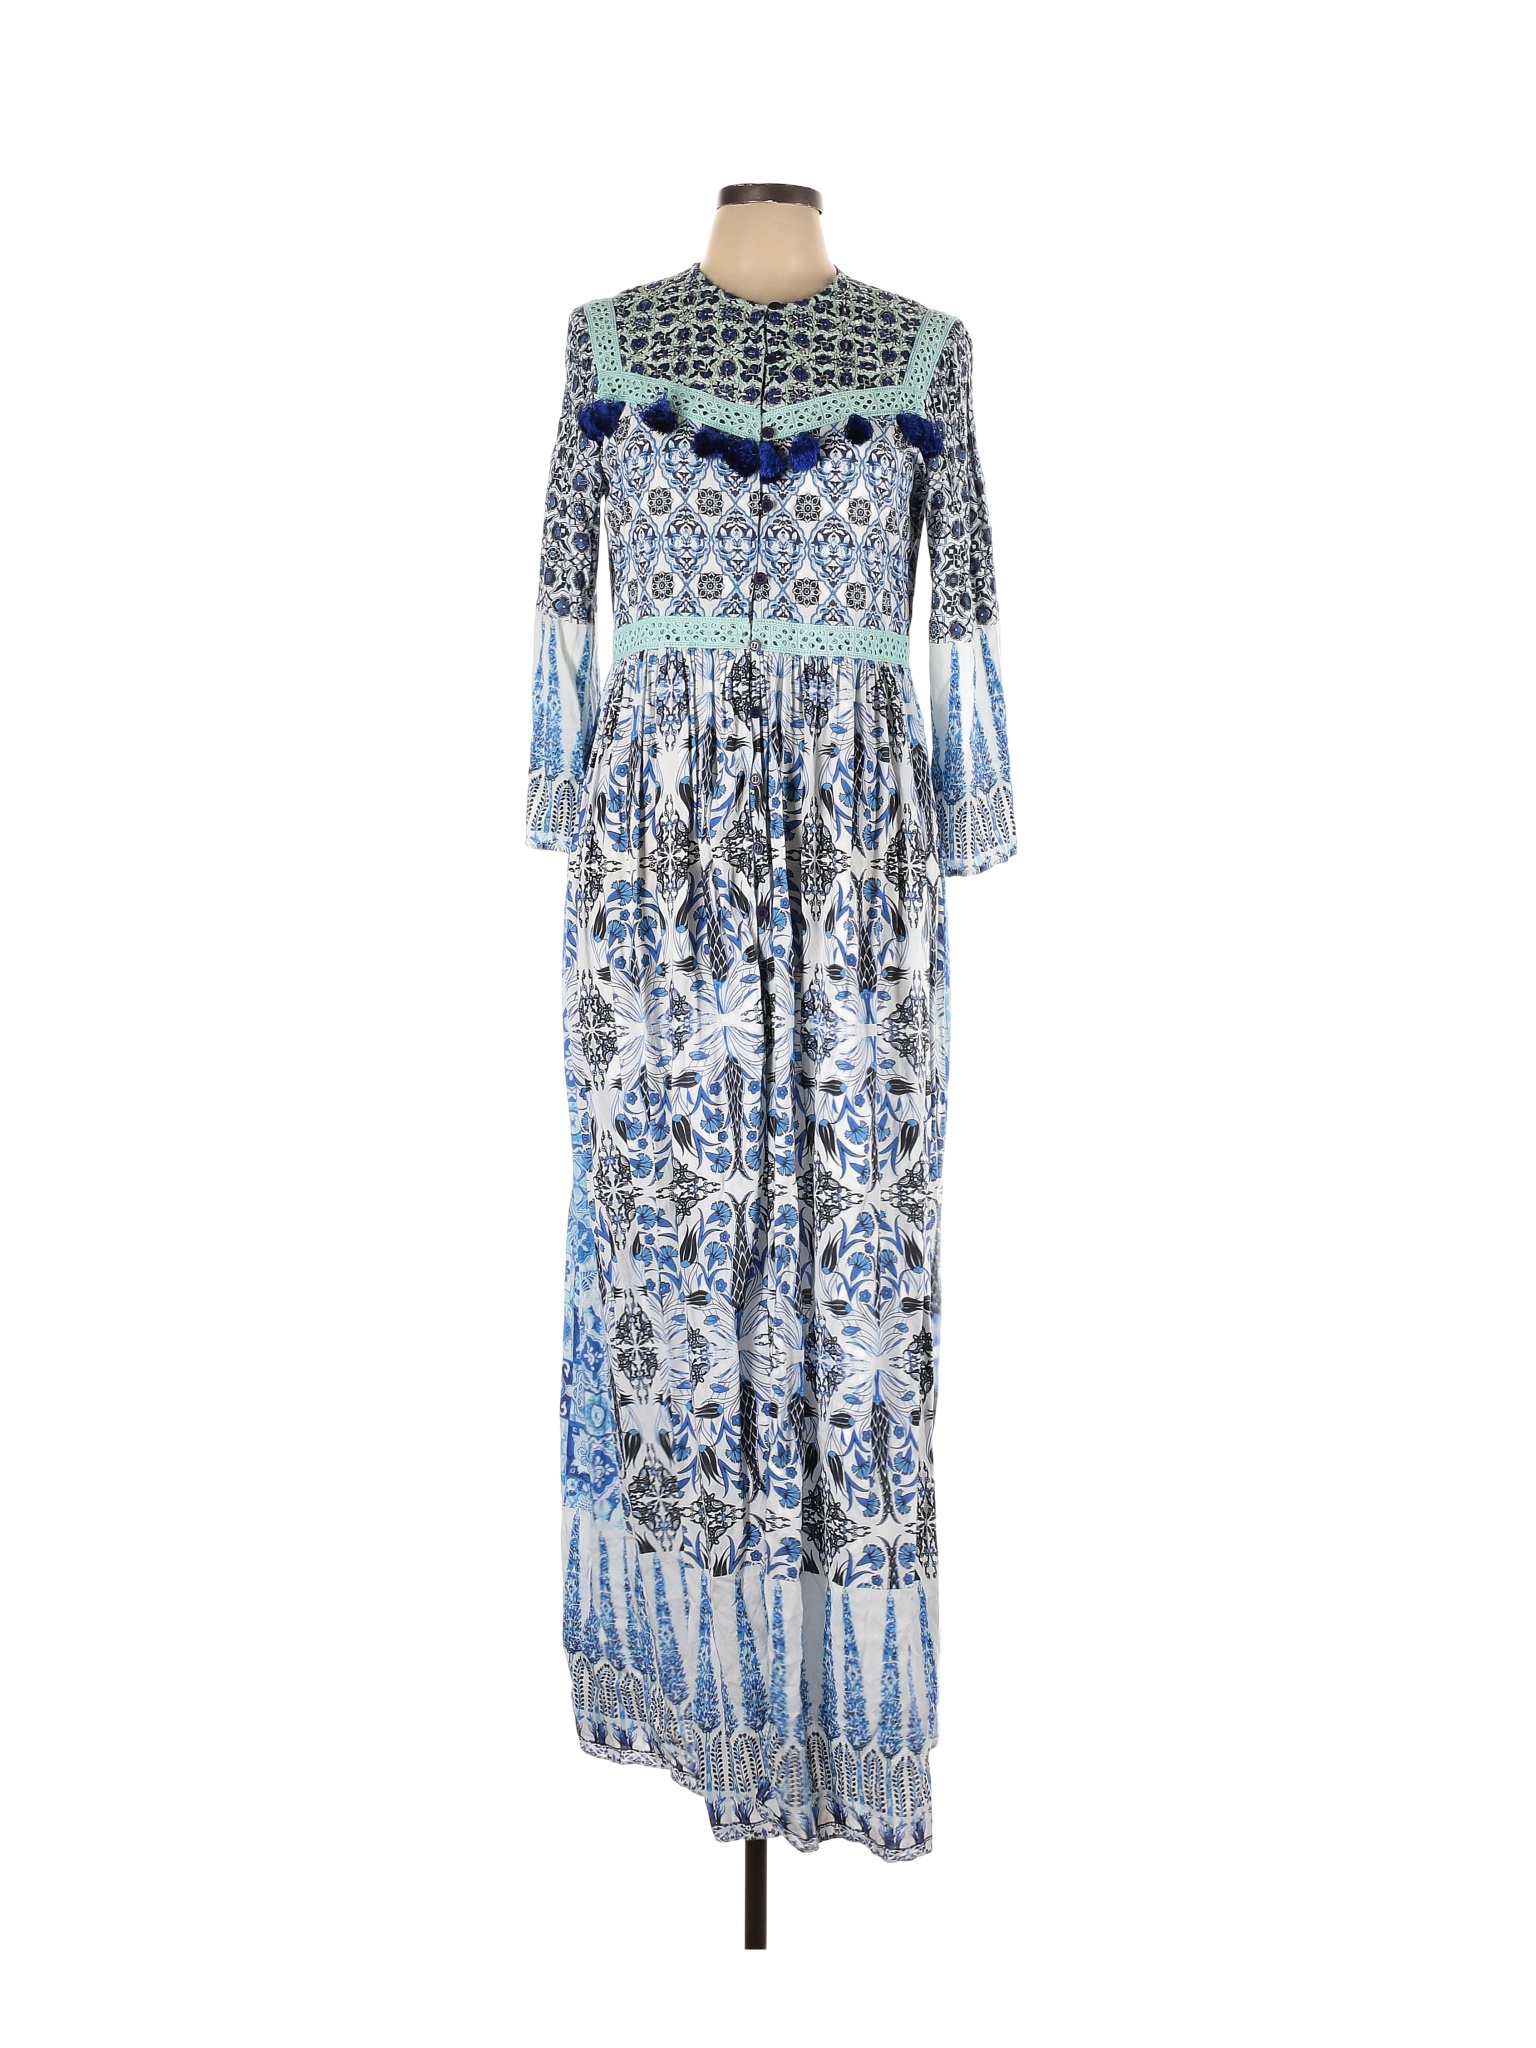 Hemant And Nandita Multi Color Blue Casual Dress Size L - 74% off | thredUP